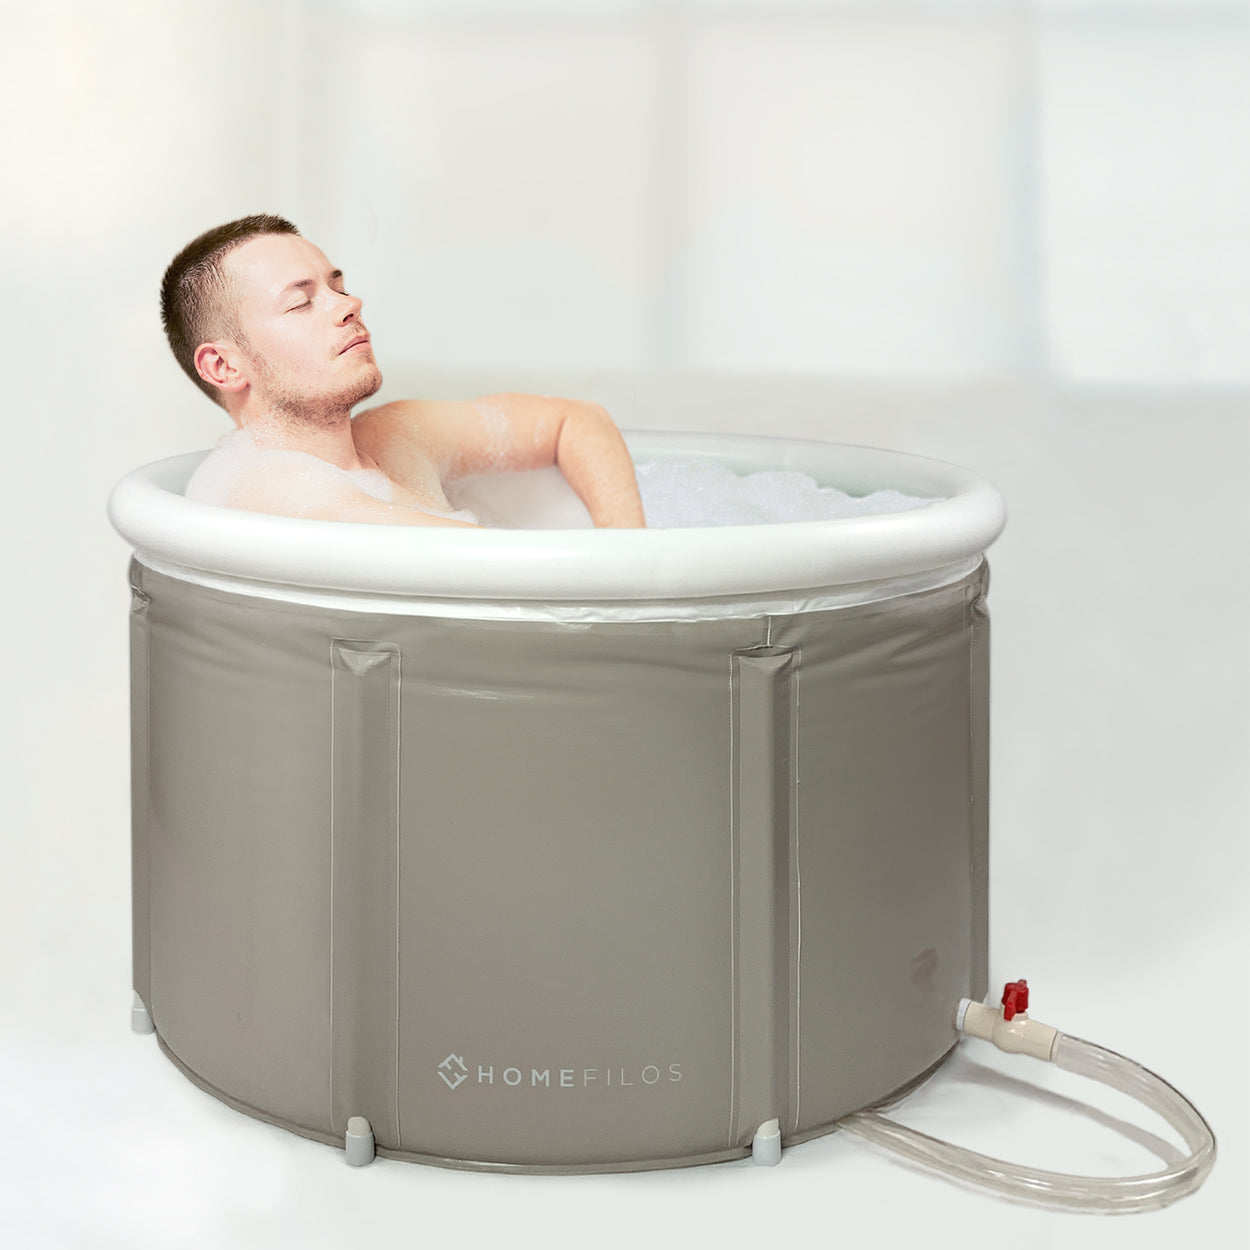  Medical Inflatable Bathtub Portable Shower for Elderly